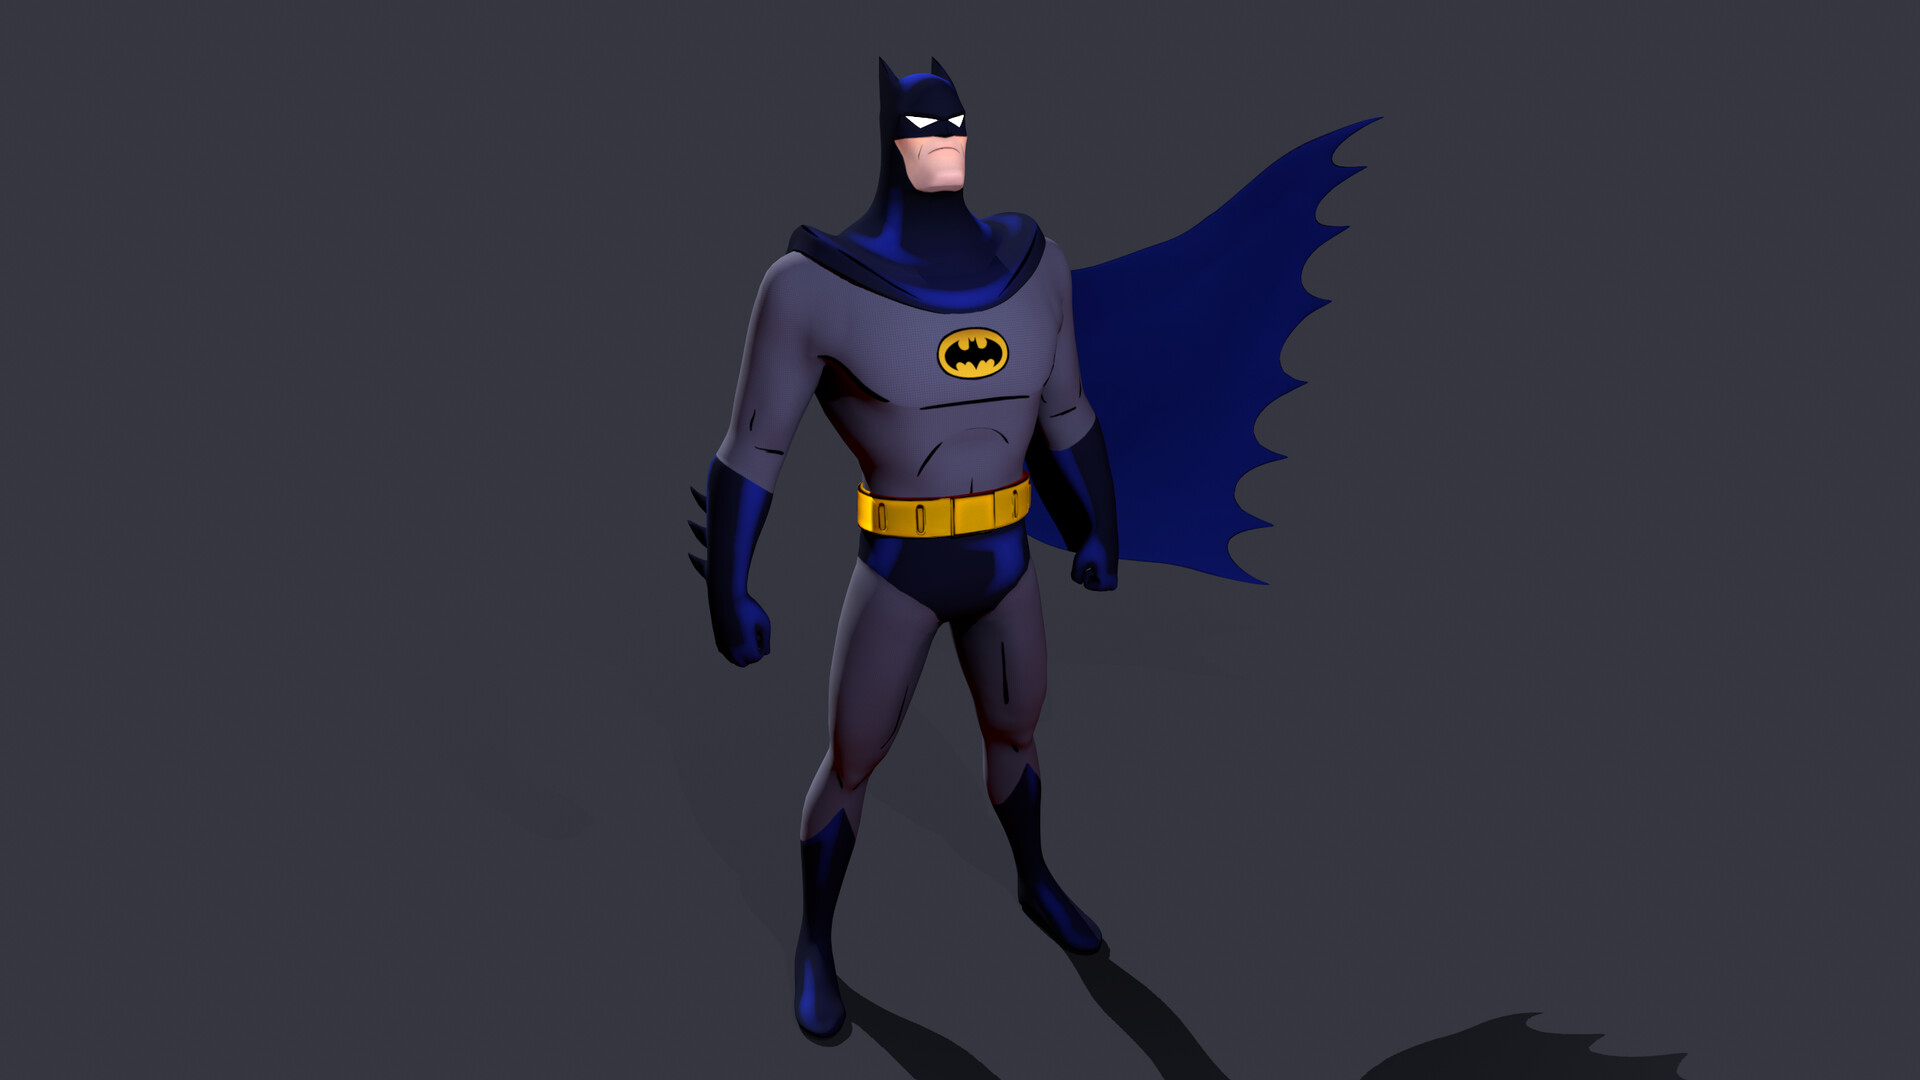 ArtStation - Batman, from The Animated Series